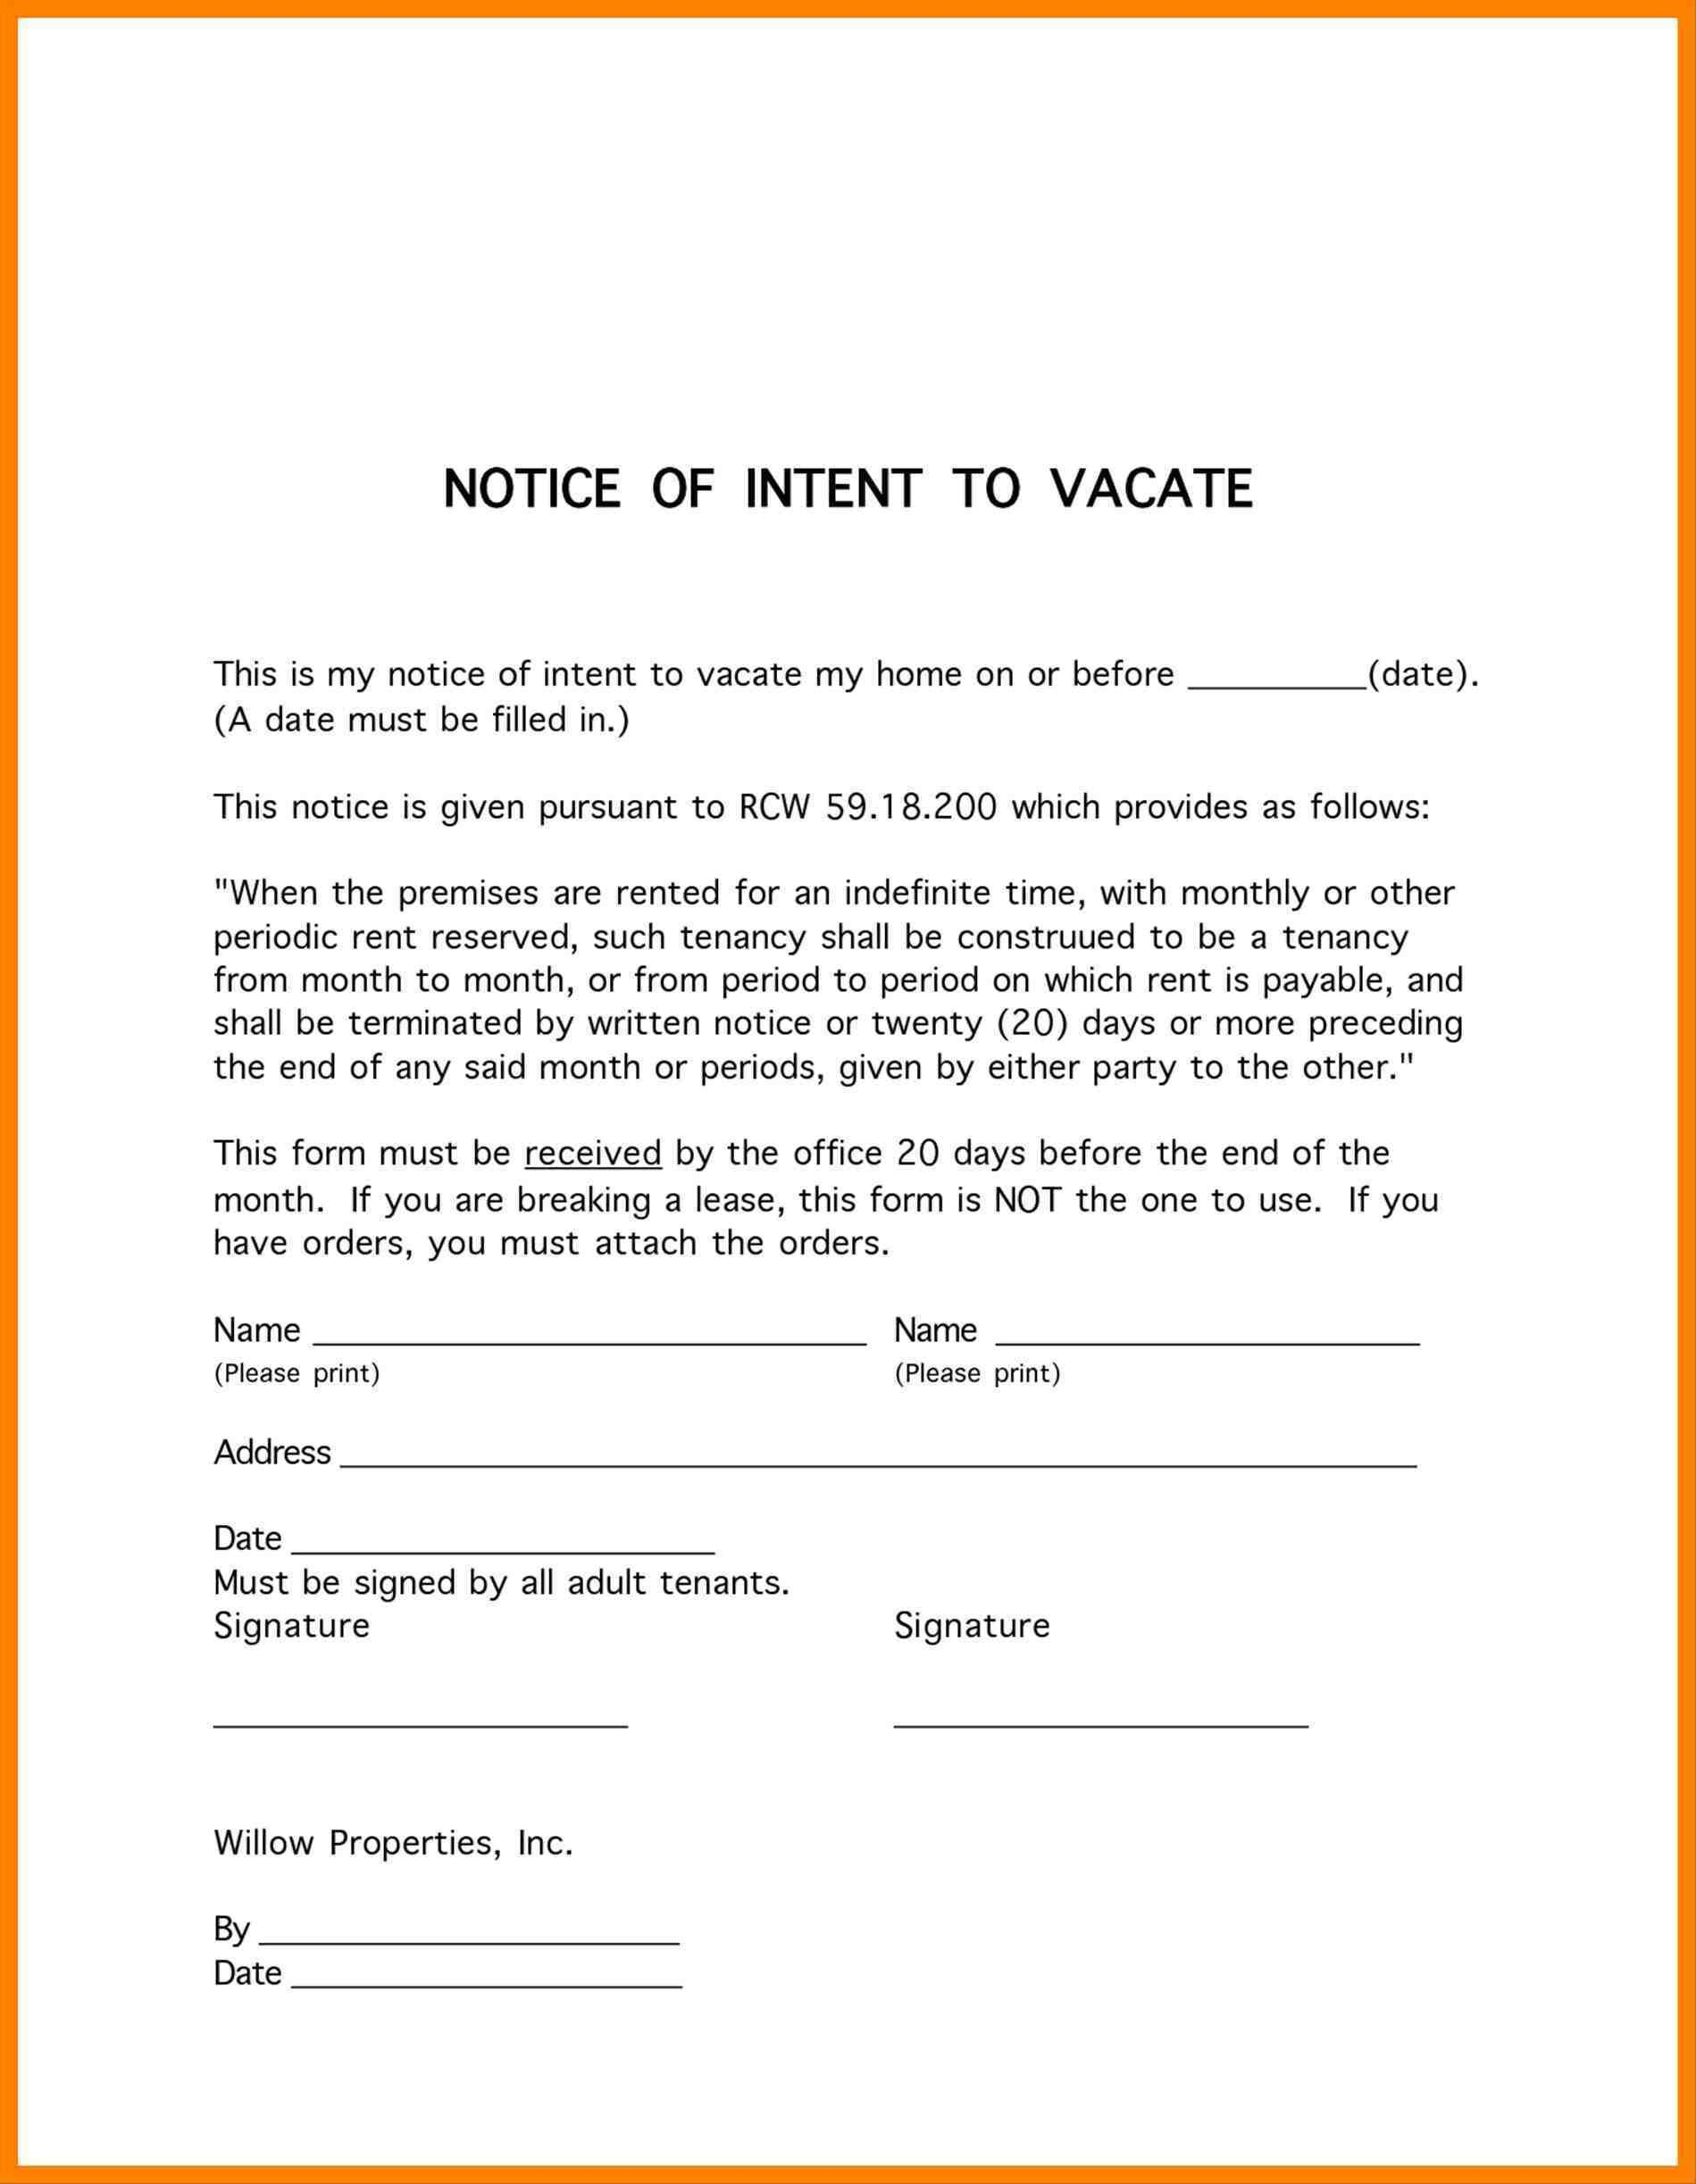 format of legal notice